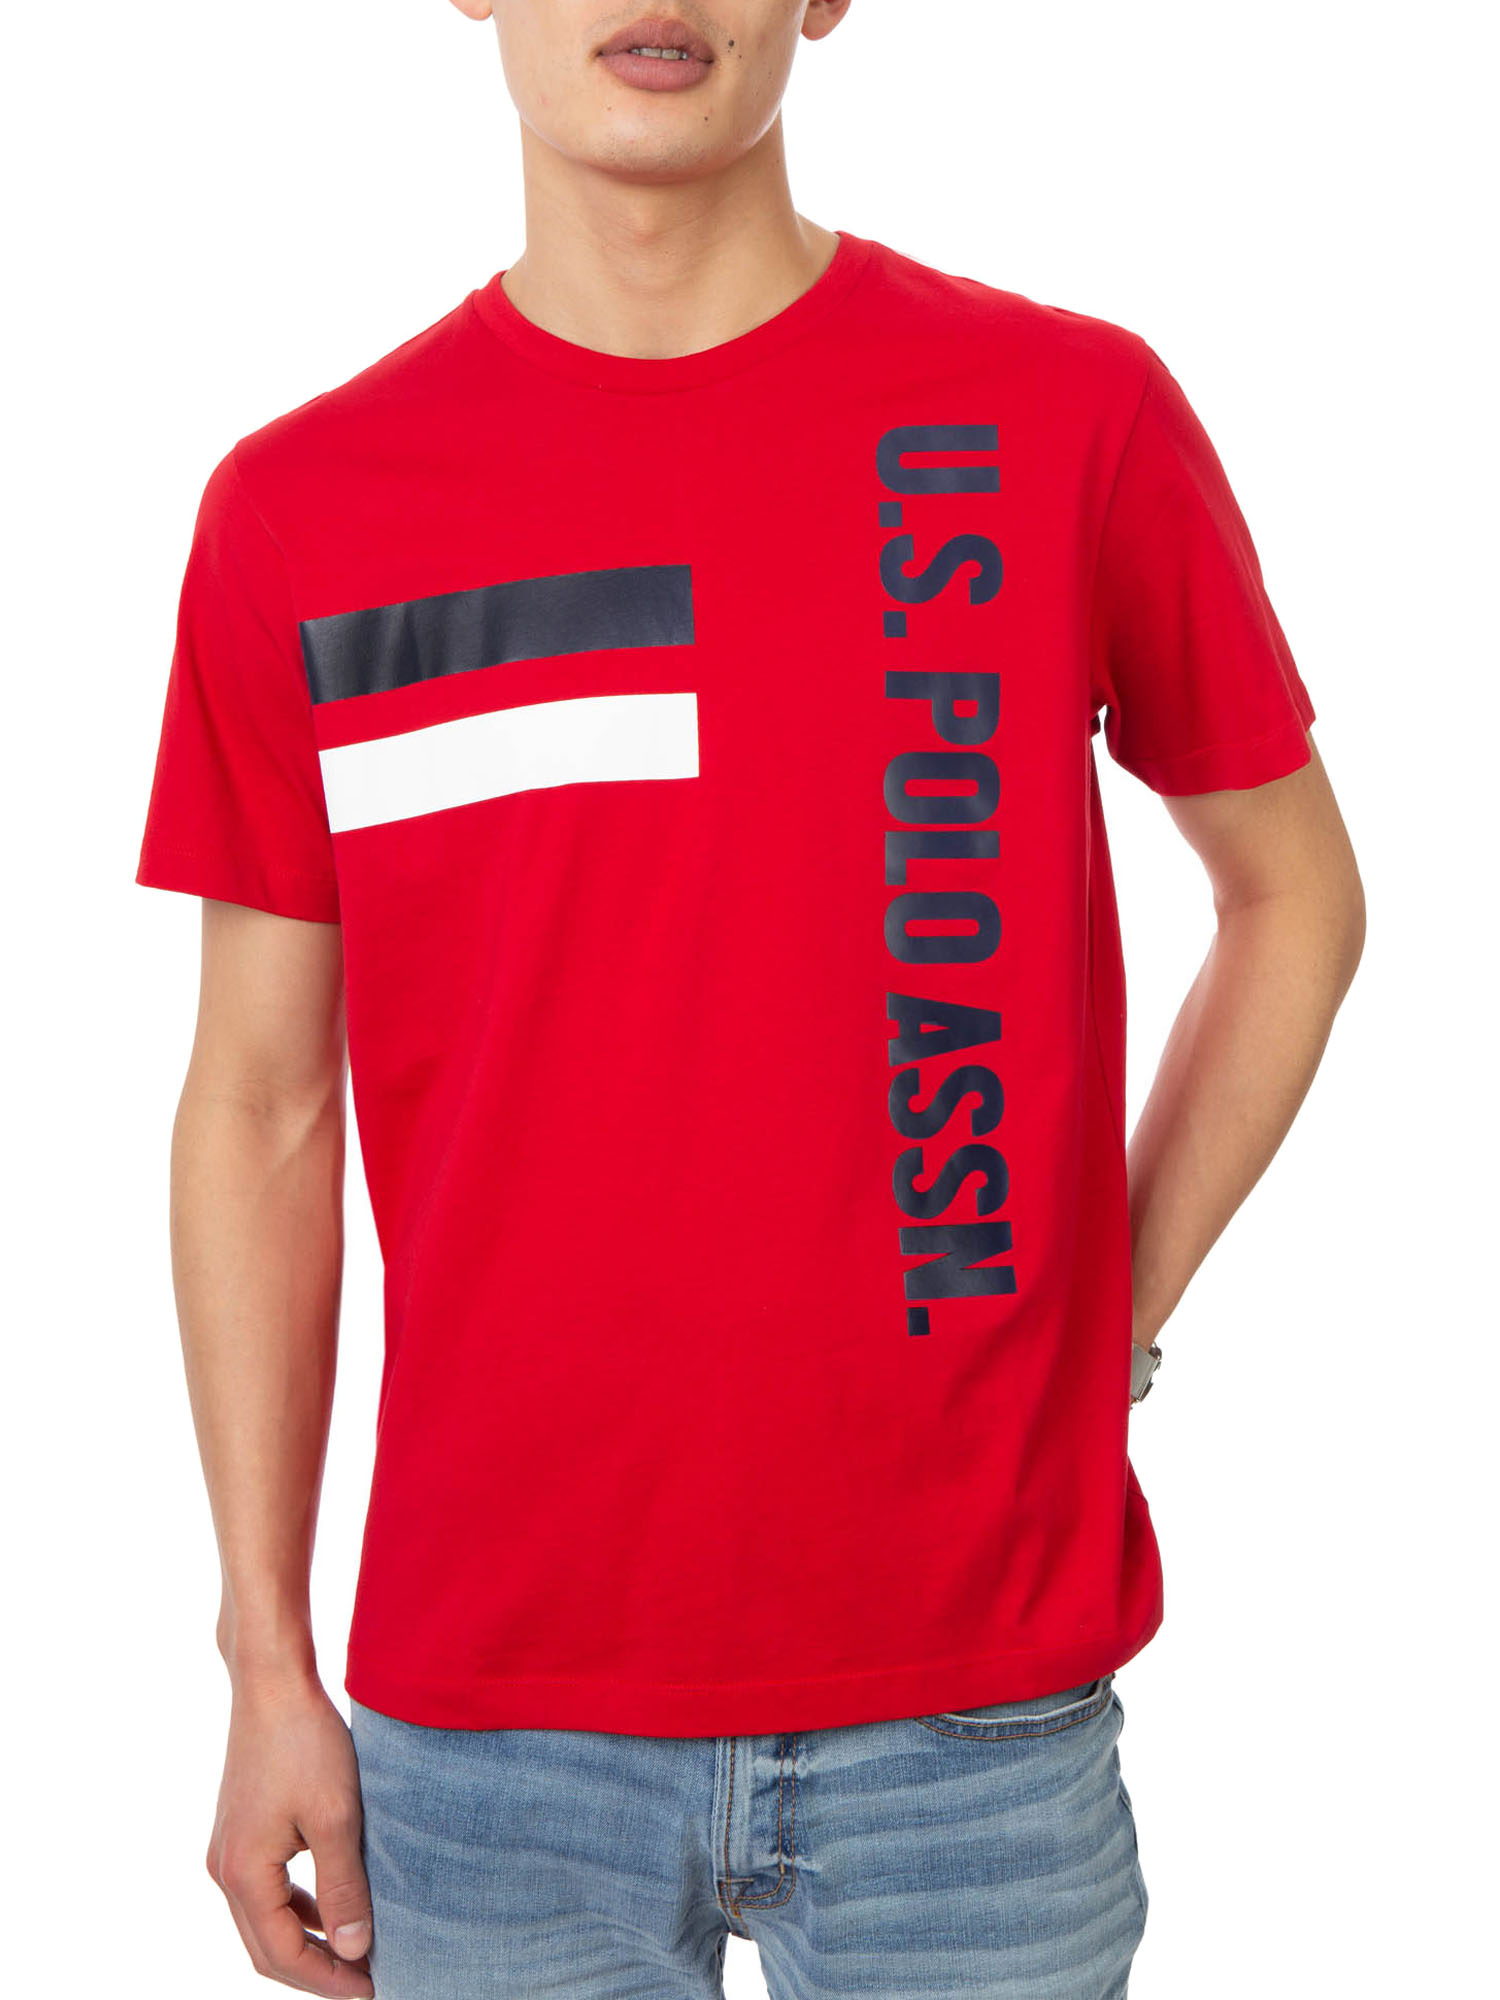 U.S. Polo Assn. Men's Short Sleeve Printed T-Shirt - image 1 of 5